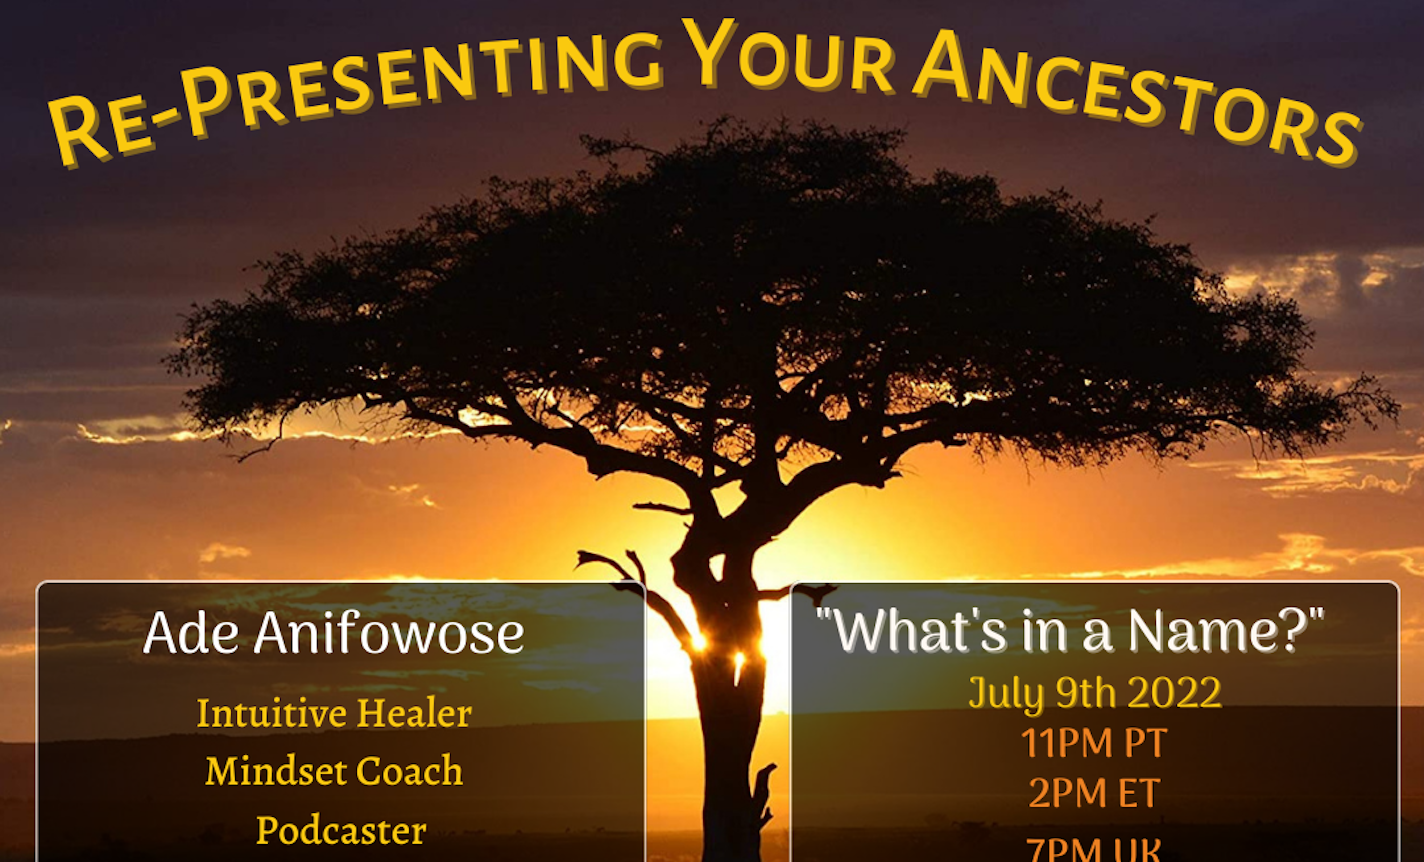 Re-Presenting Your Ancestors